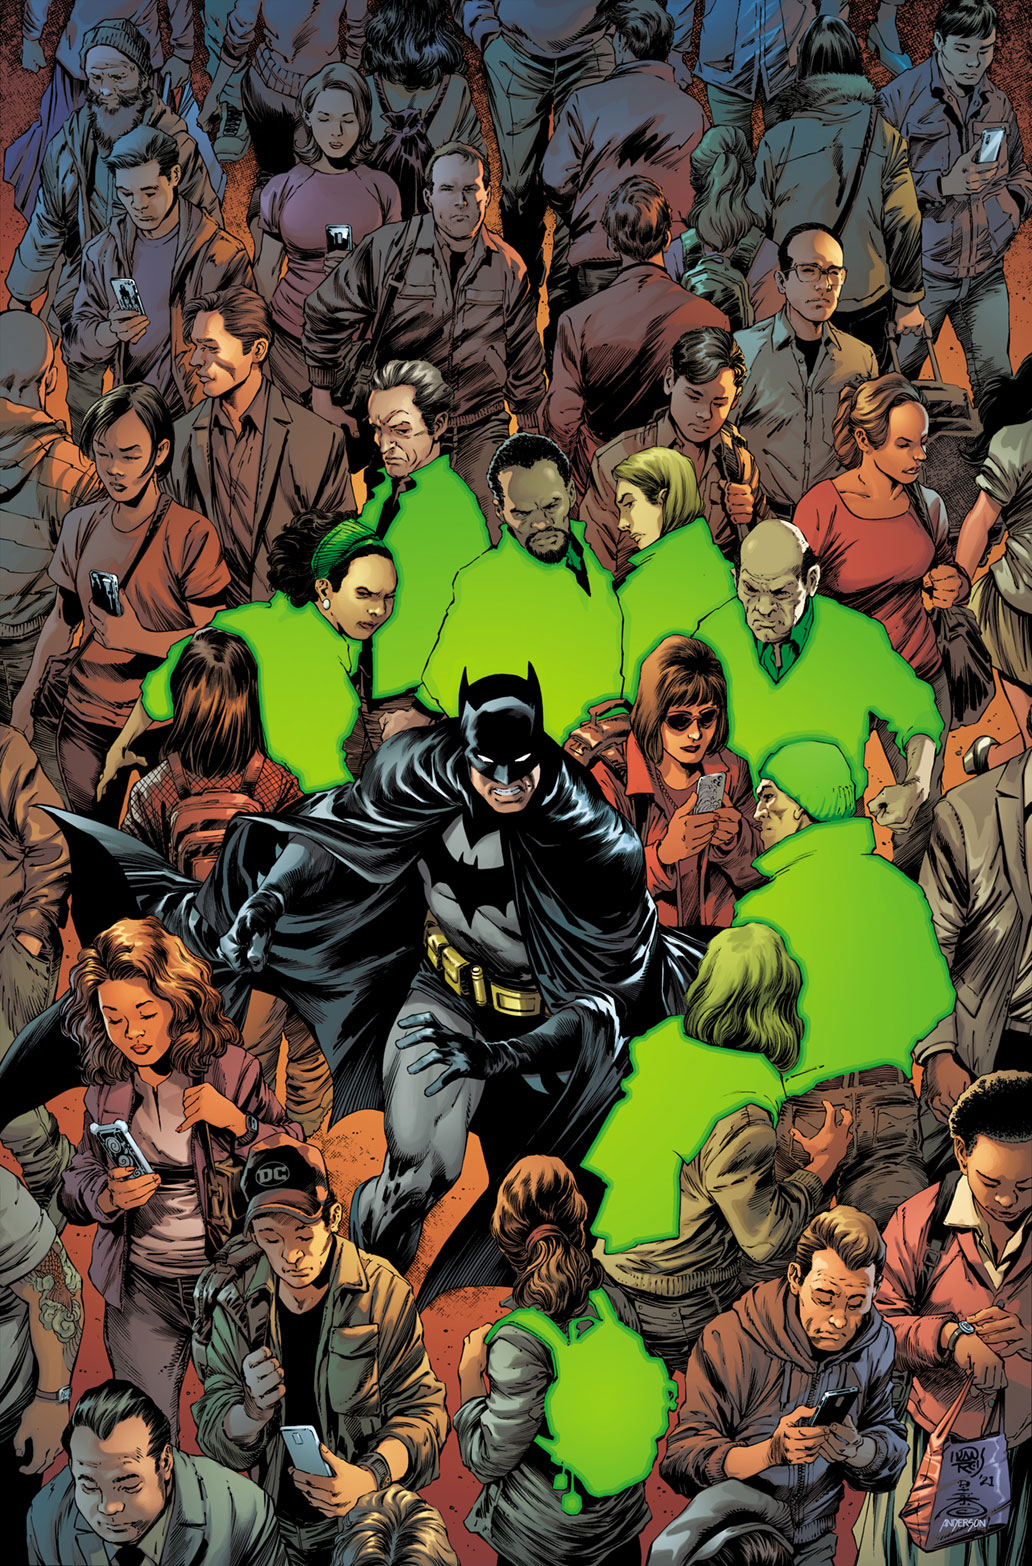 Detective Comics #1059 ana kapağı